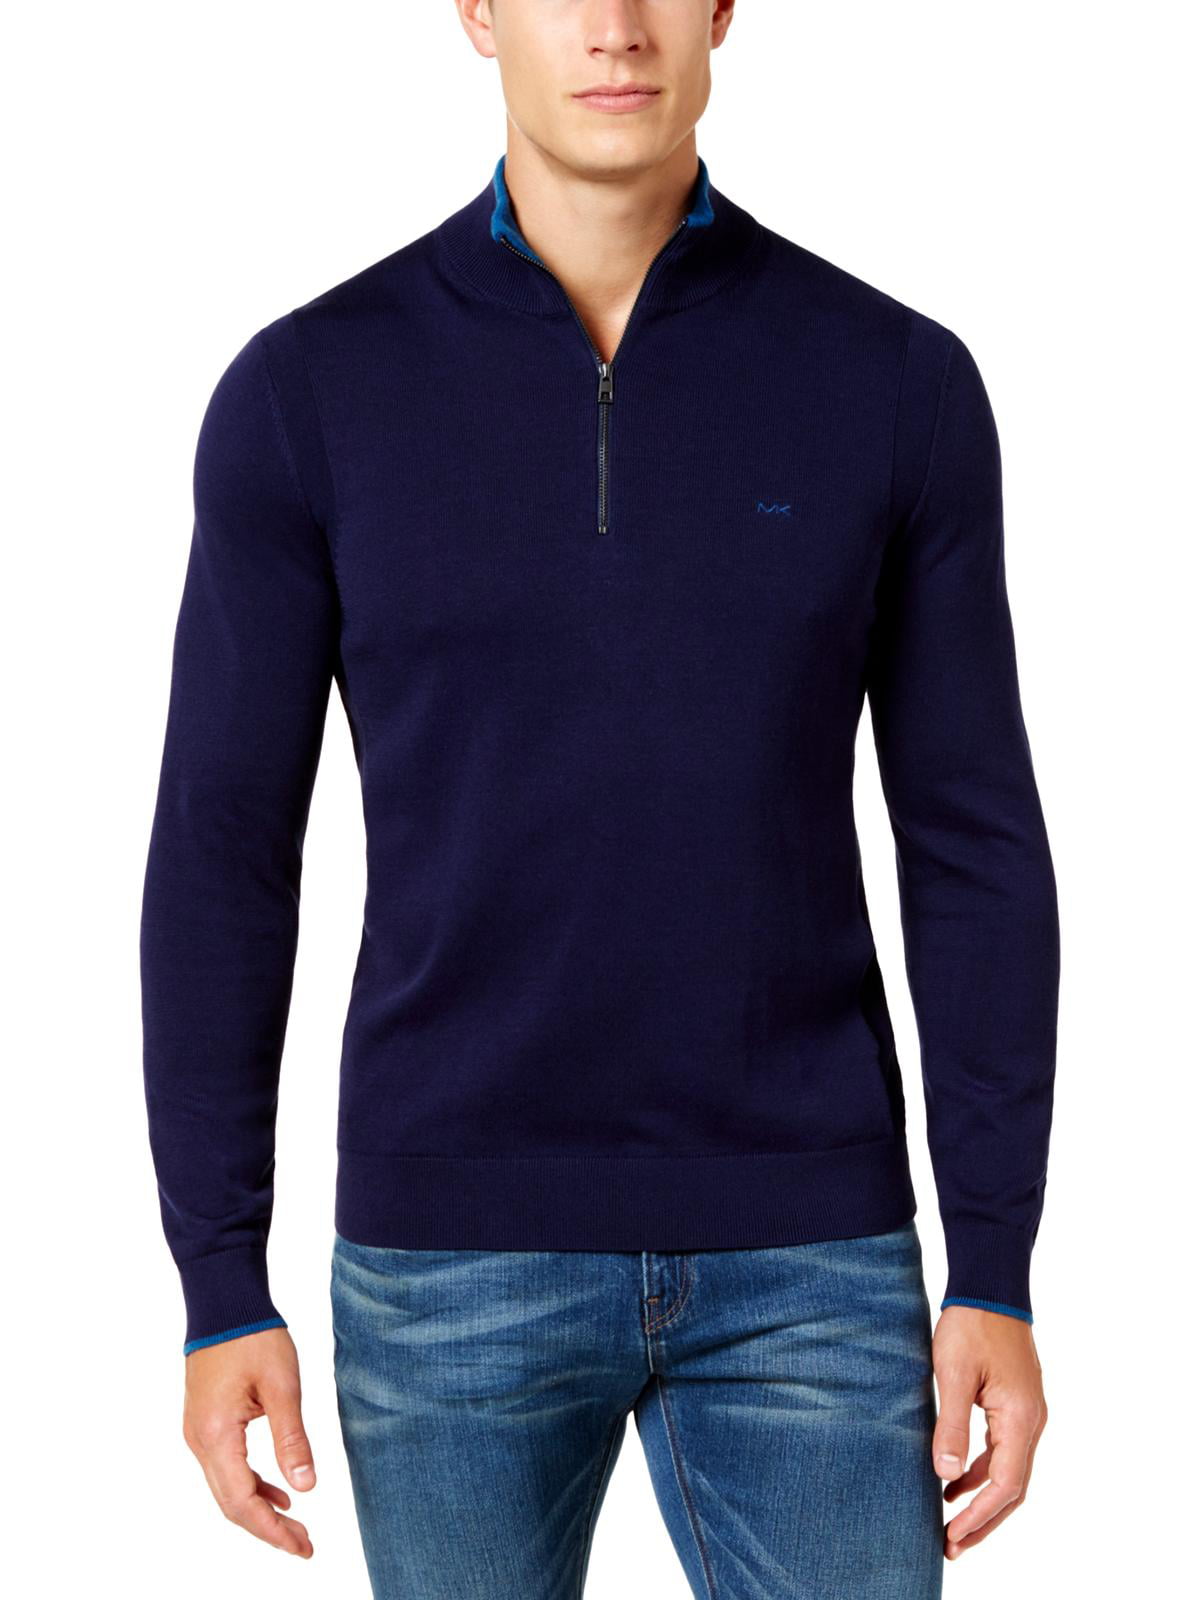 Michael Kors - Michael Kors Mens Striped 1/4 Zip Pullover Sweater ...